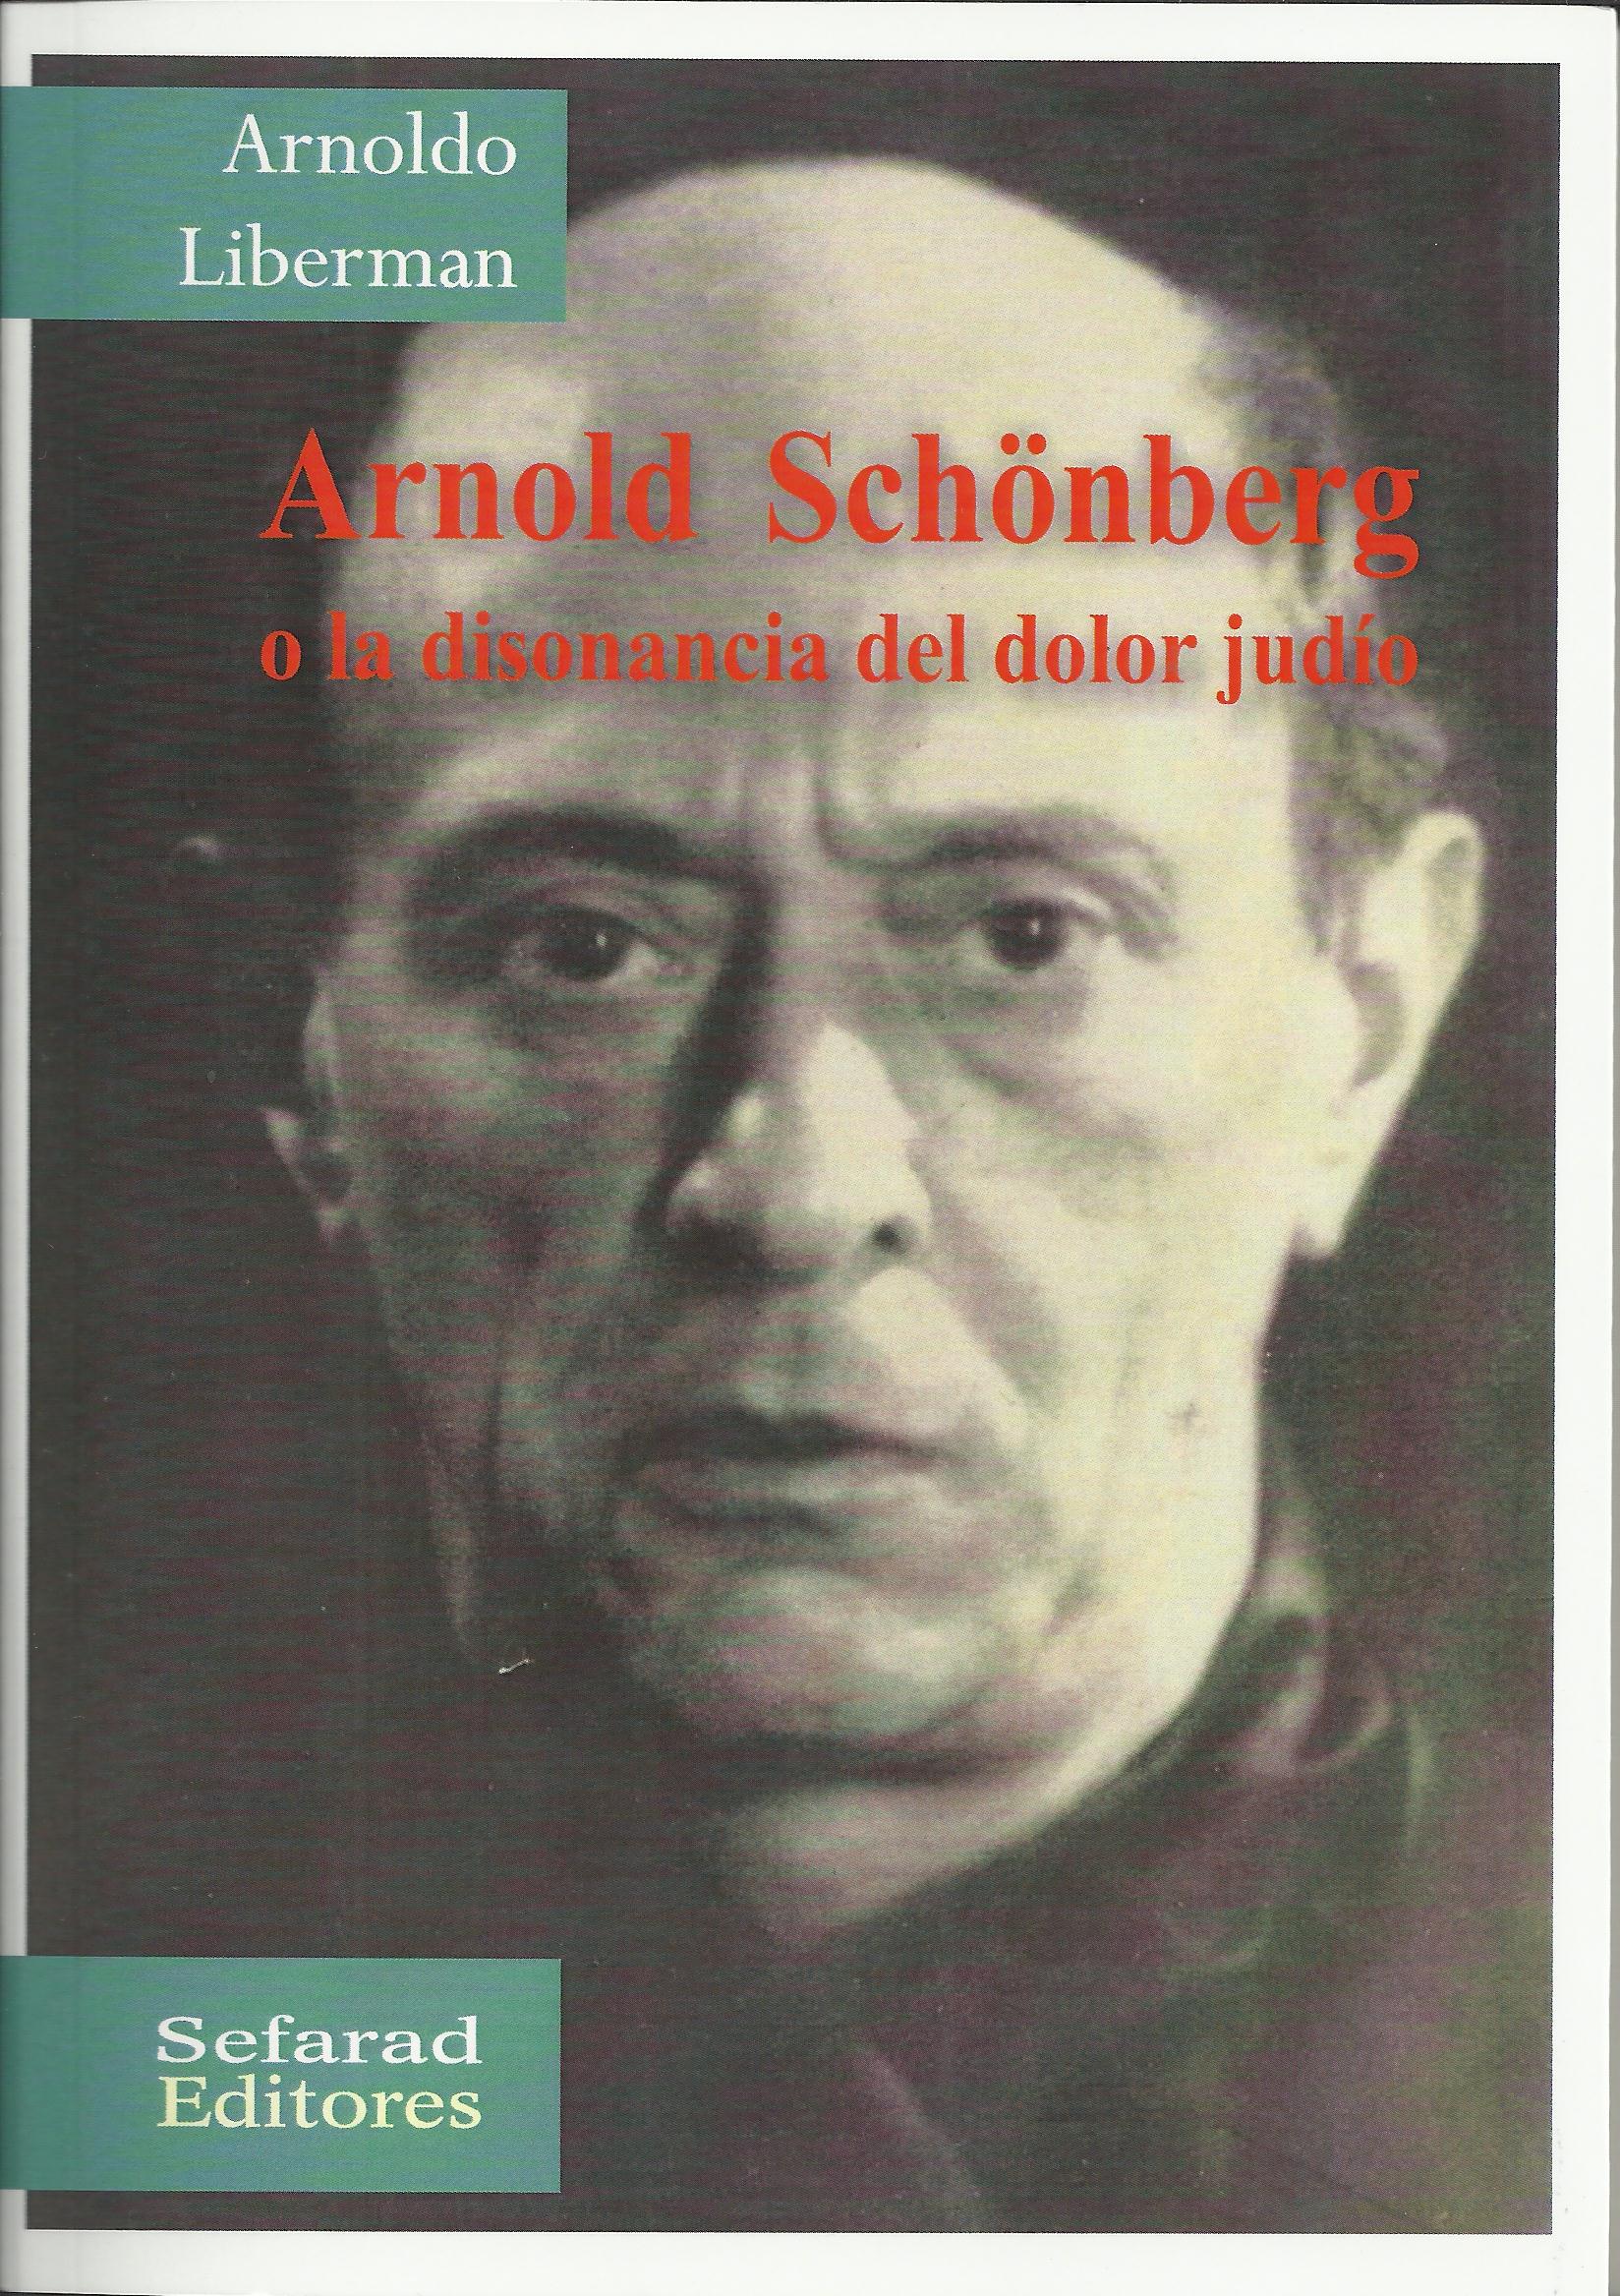 Schönberg reflexionat per Liberman